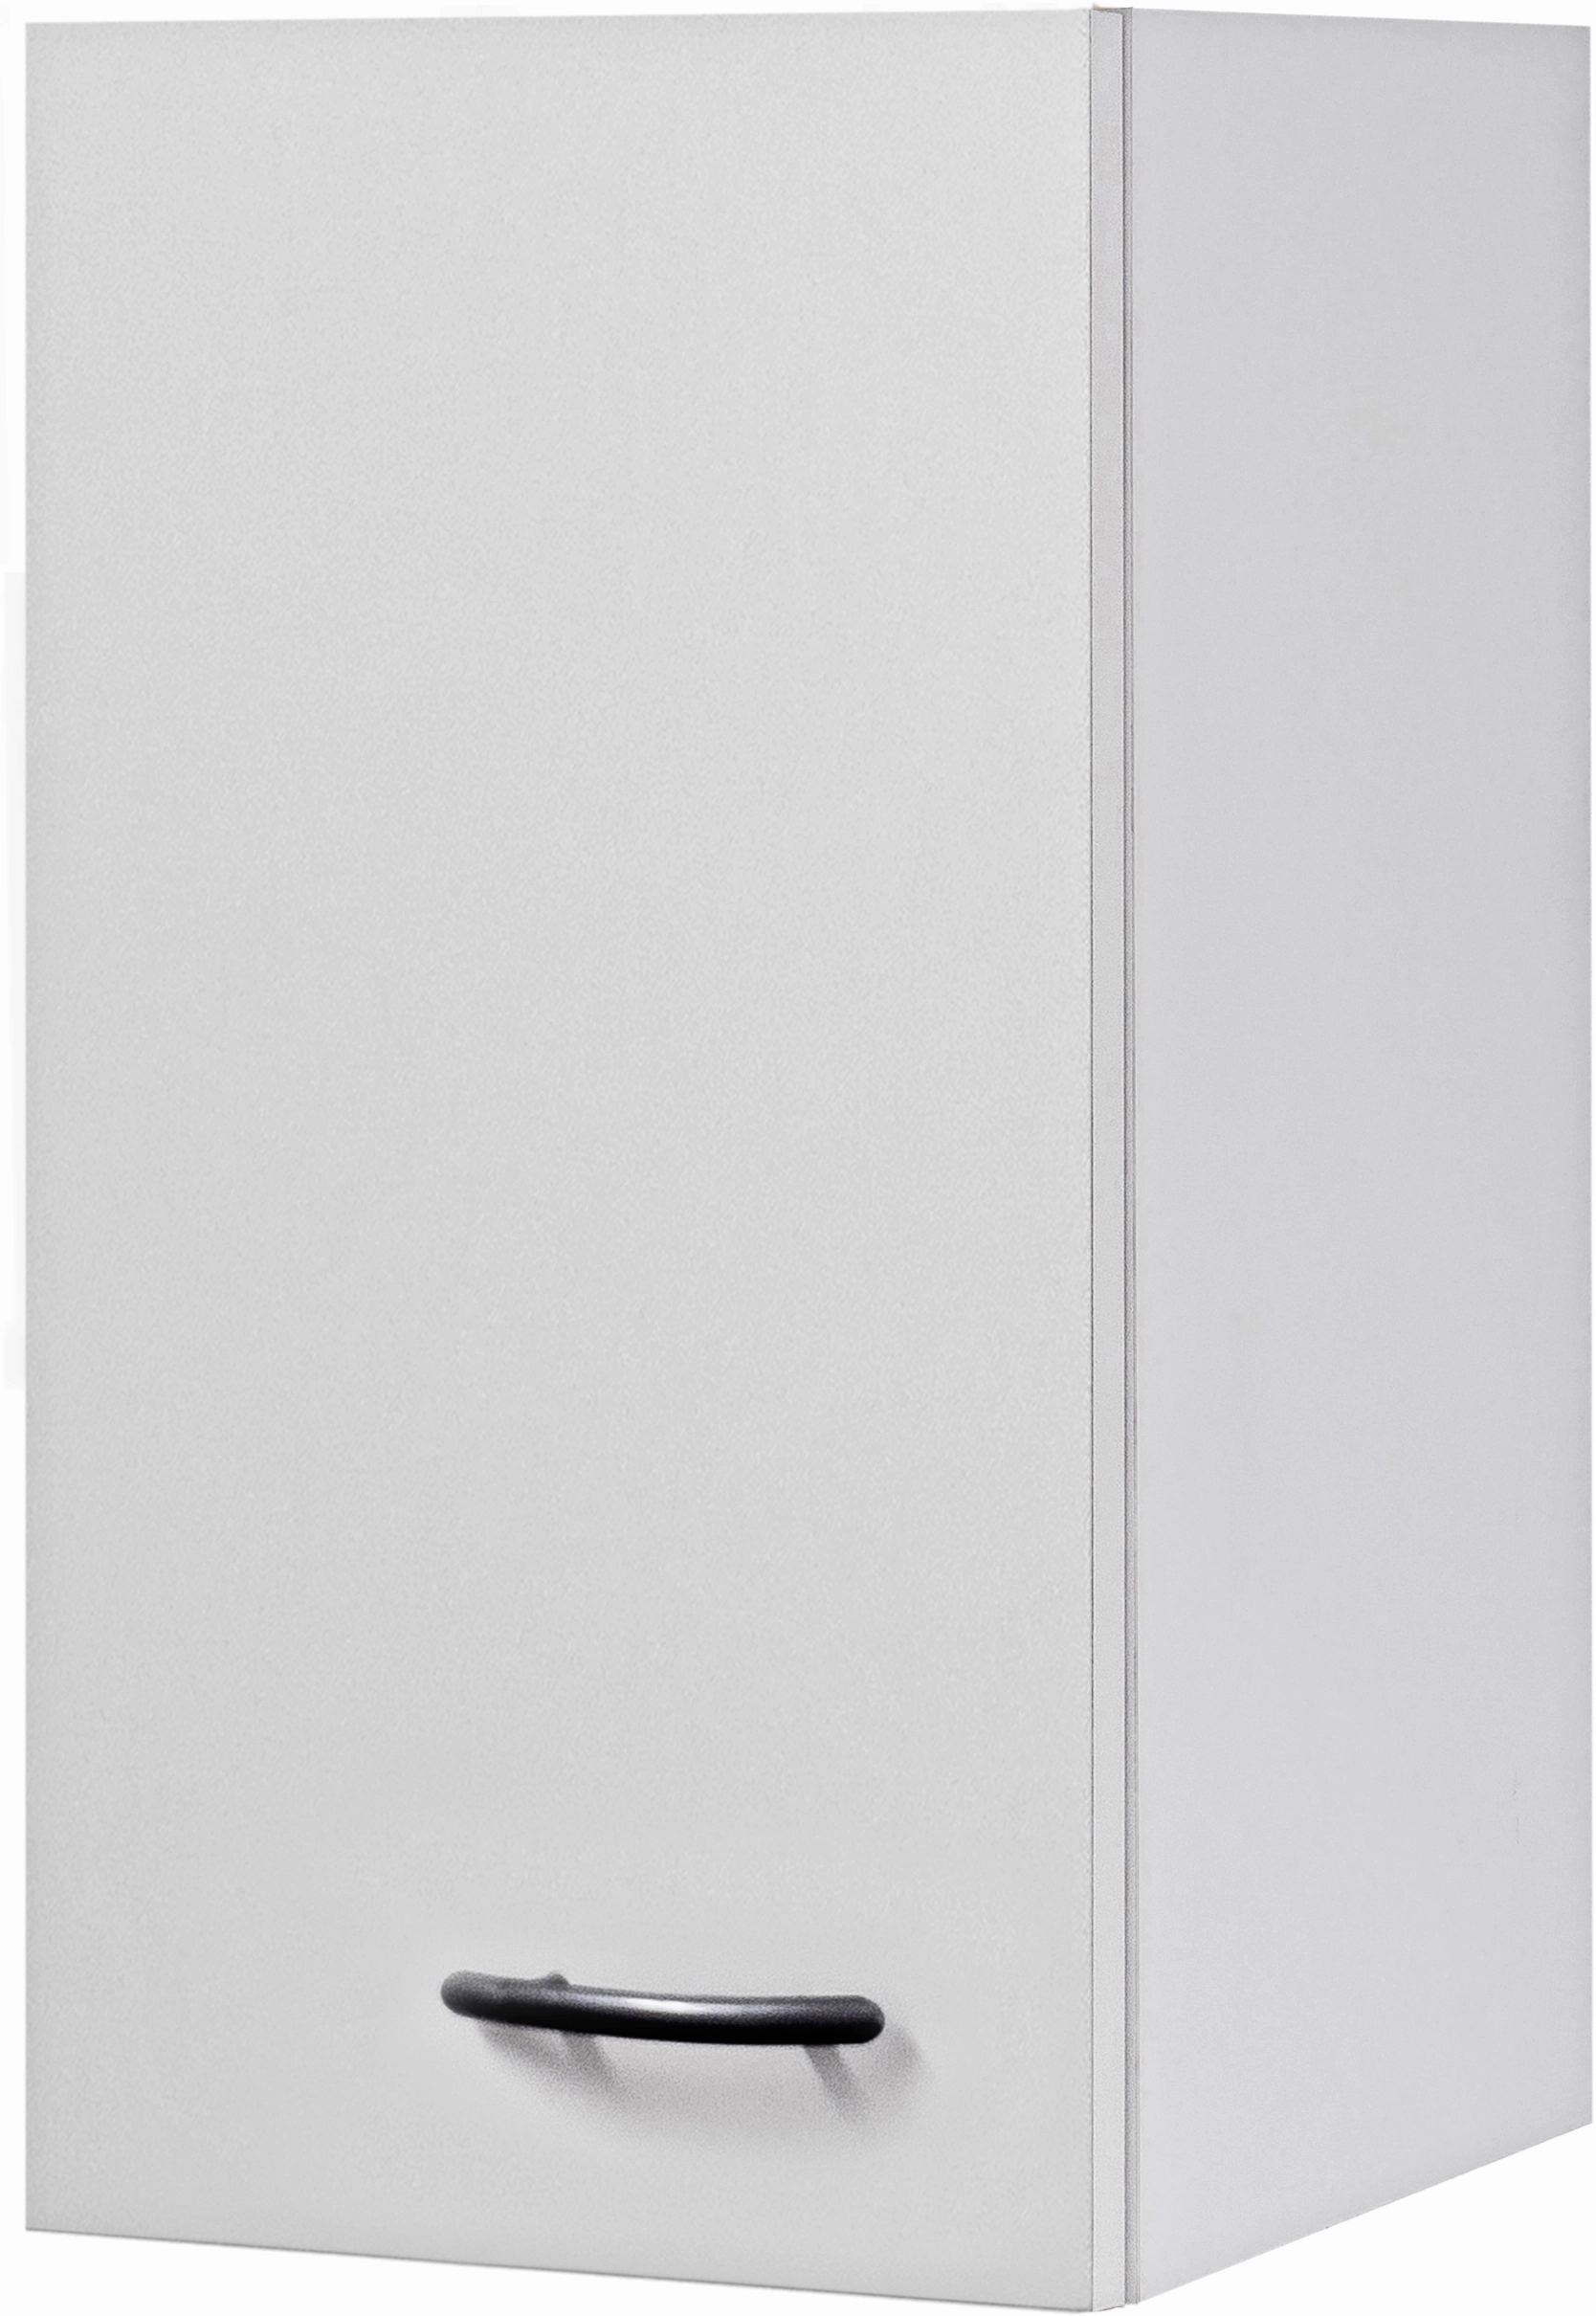 Flex-Well Classic Oberschrank Wito 30 cm Weiß kaufen bei OBI